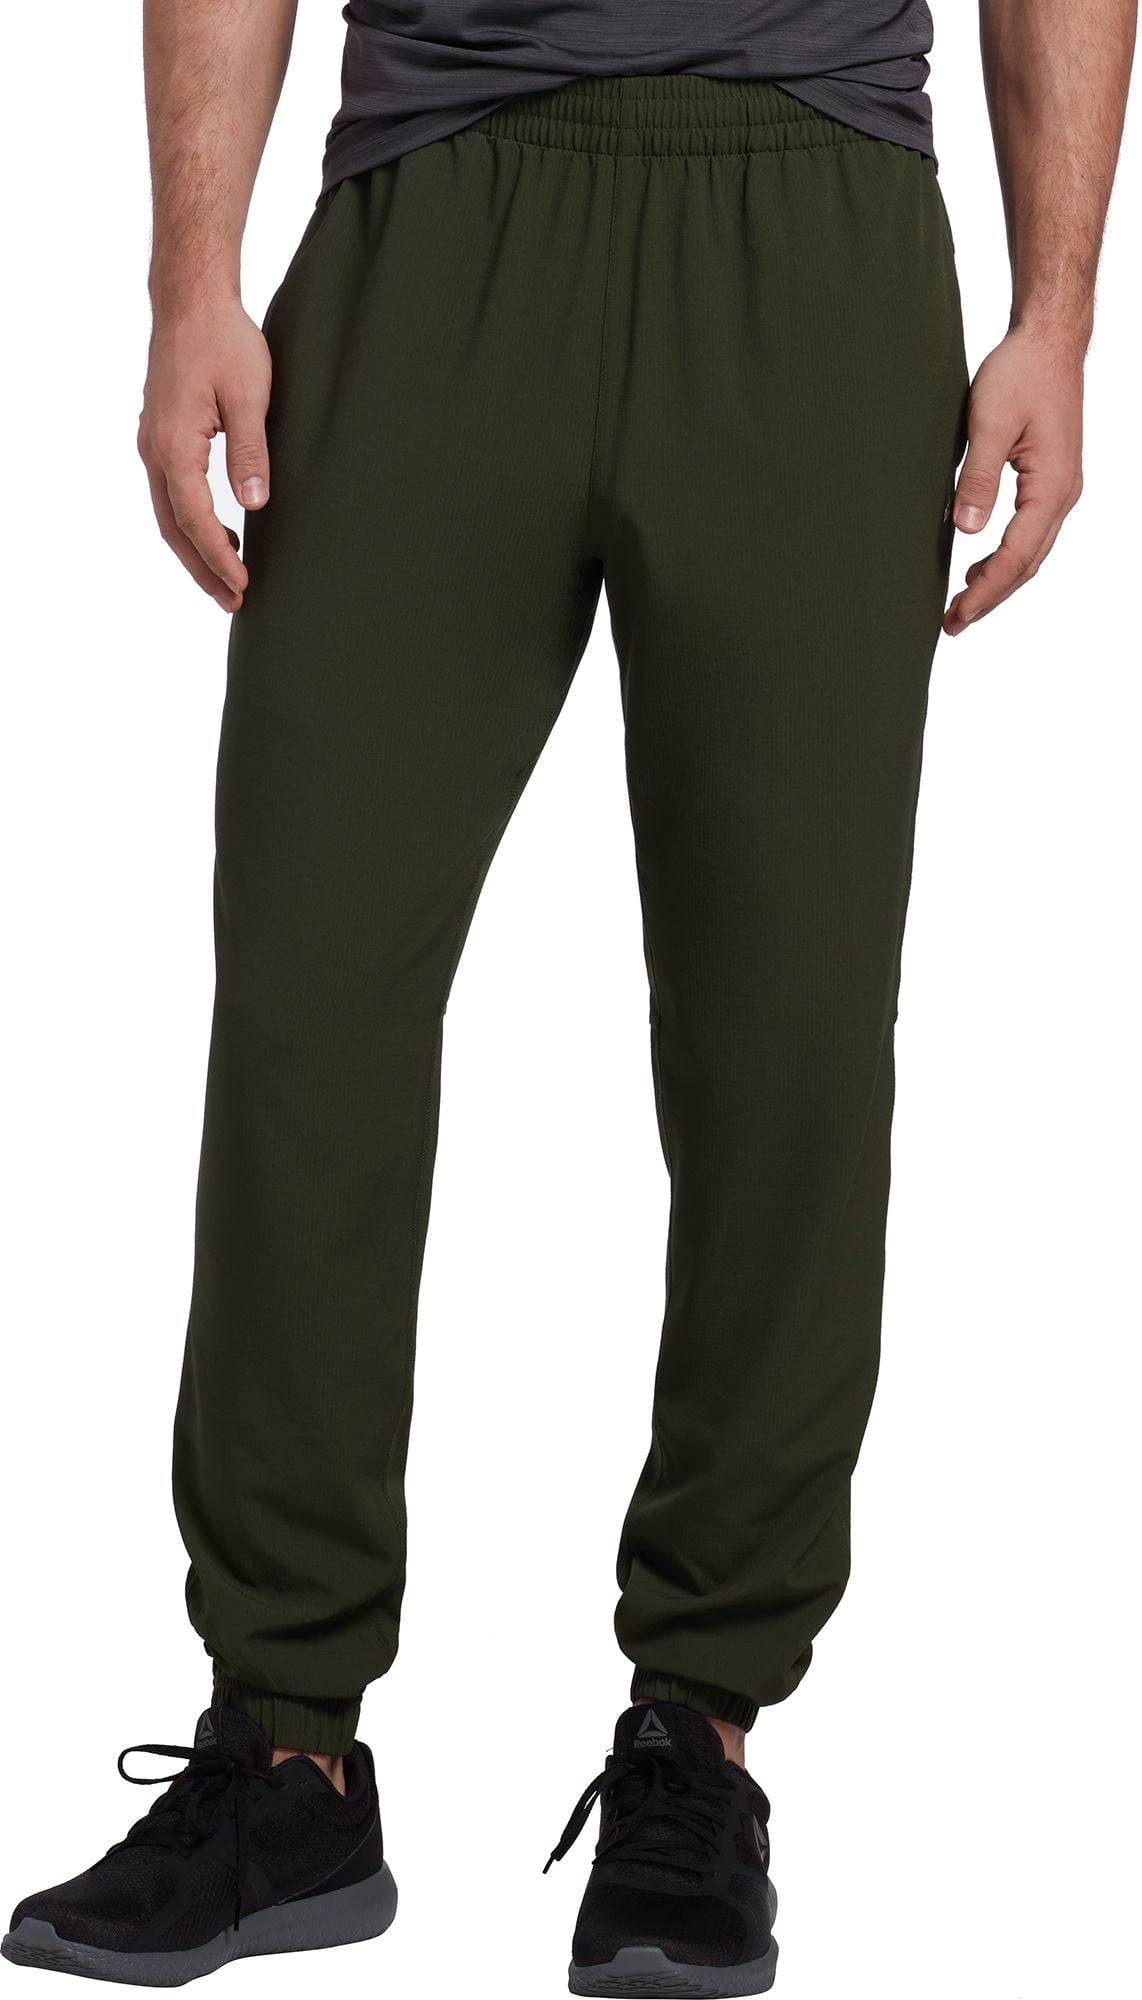 DSG Outerwear - DSG Men's Woven Training Jogger Pants - Walmart.com ...